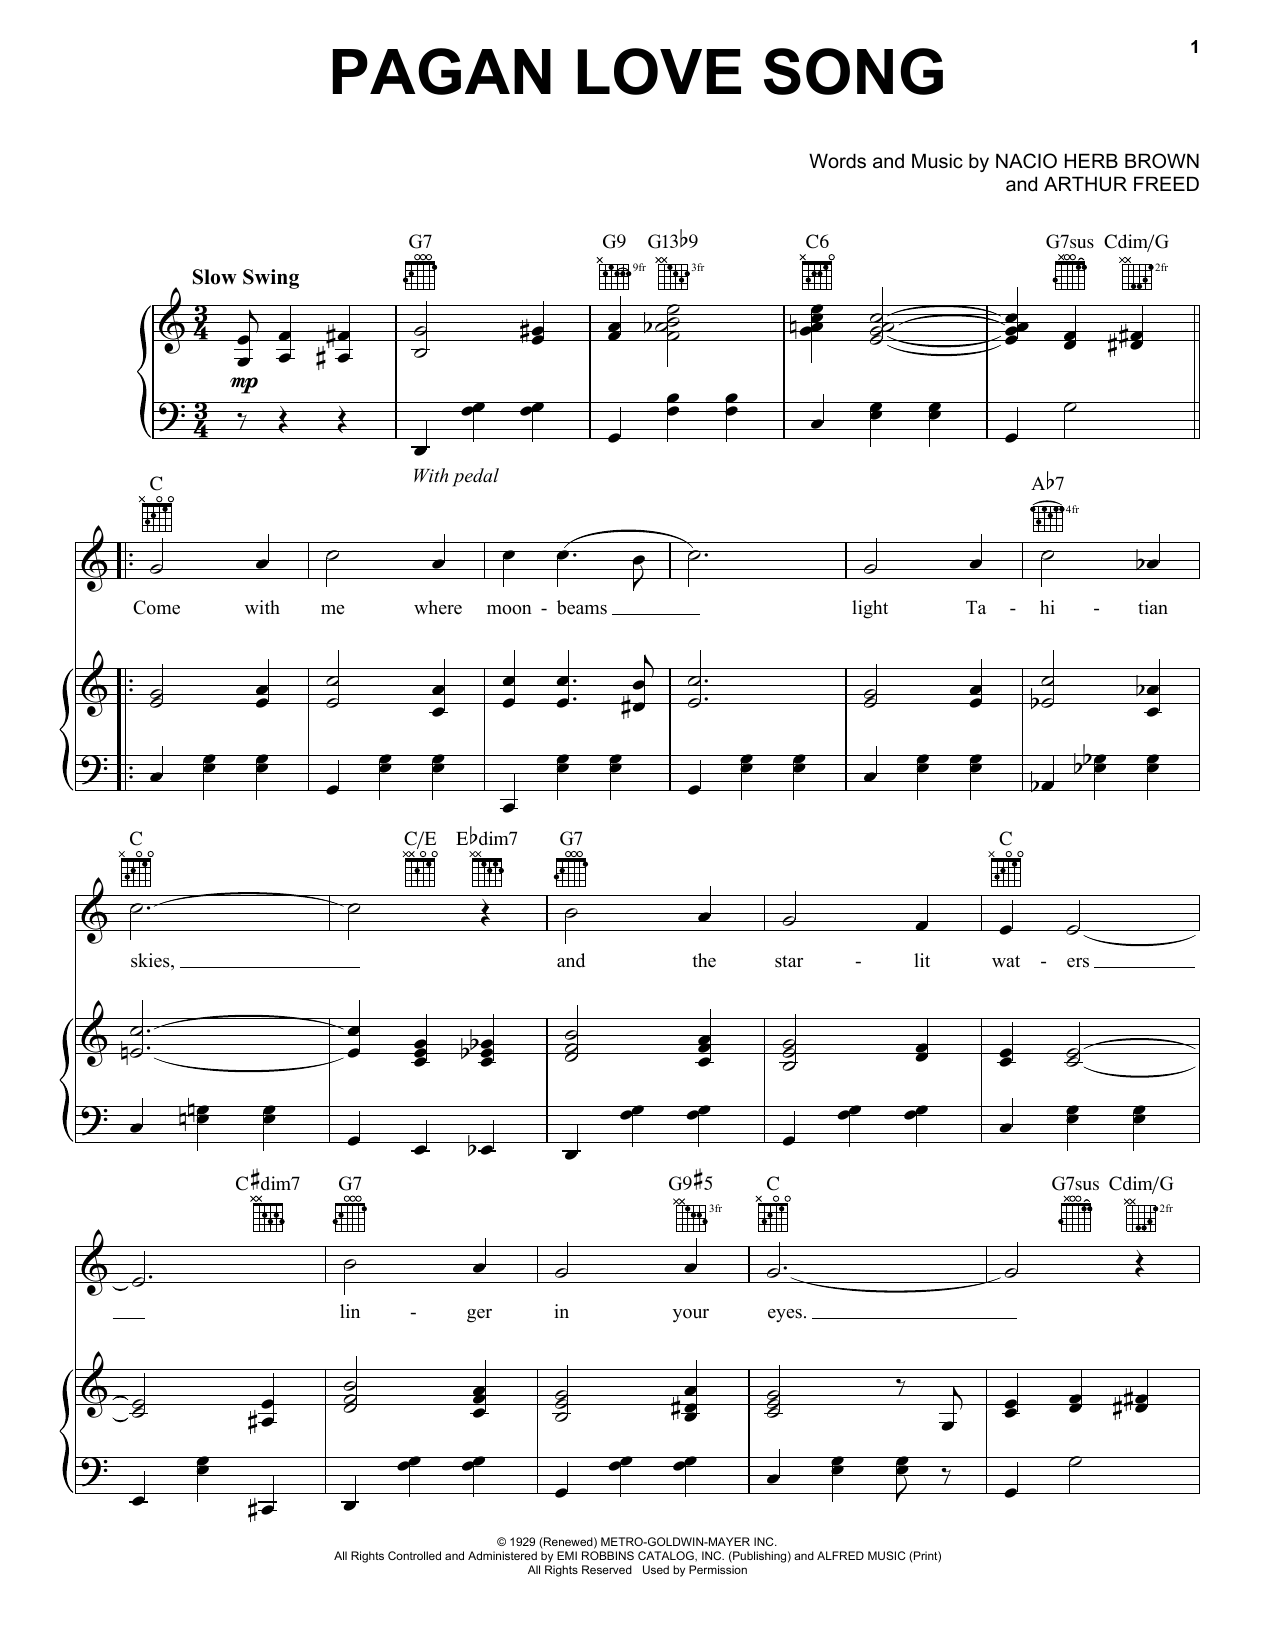 Nacio Herb Brown Pagan Love Song Sheet Music Notes & Chords for Piano, Vocal & Guitar (Right-Hand Melody) - Download or Print PDF